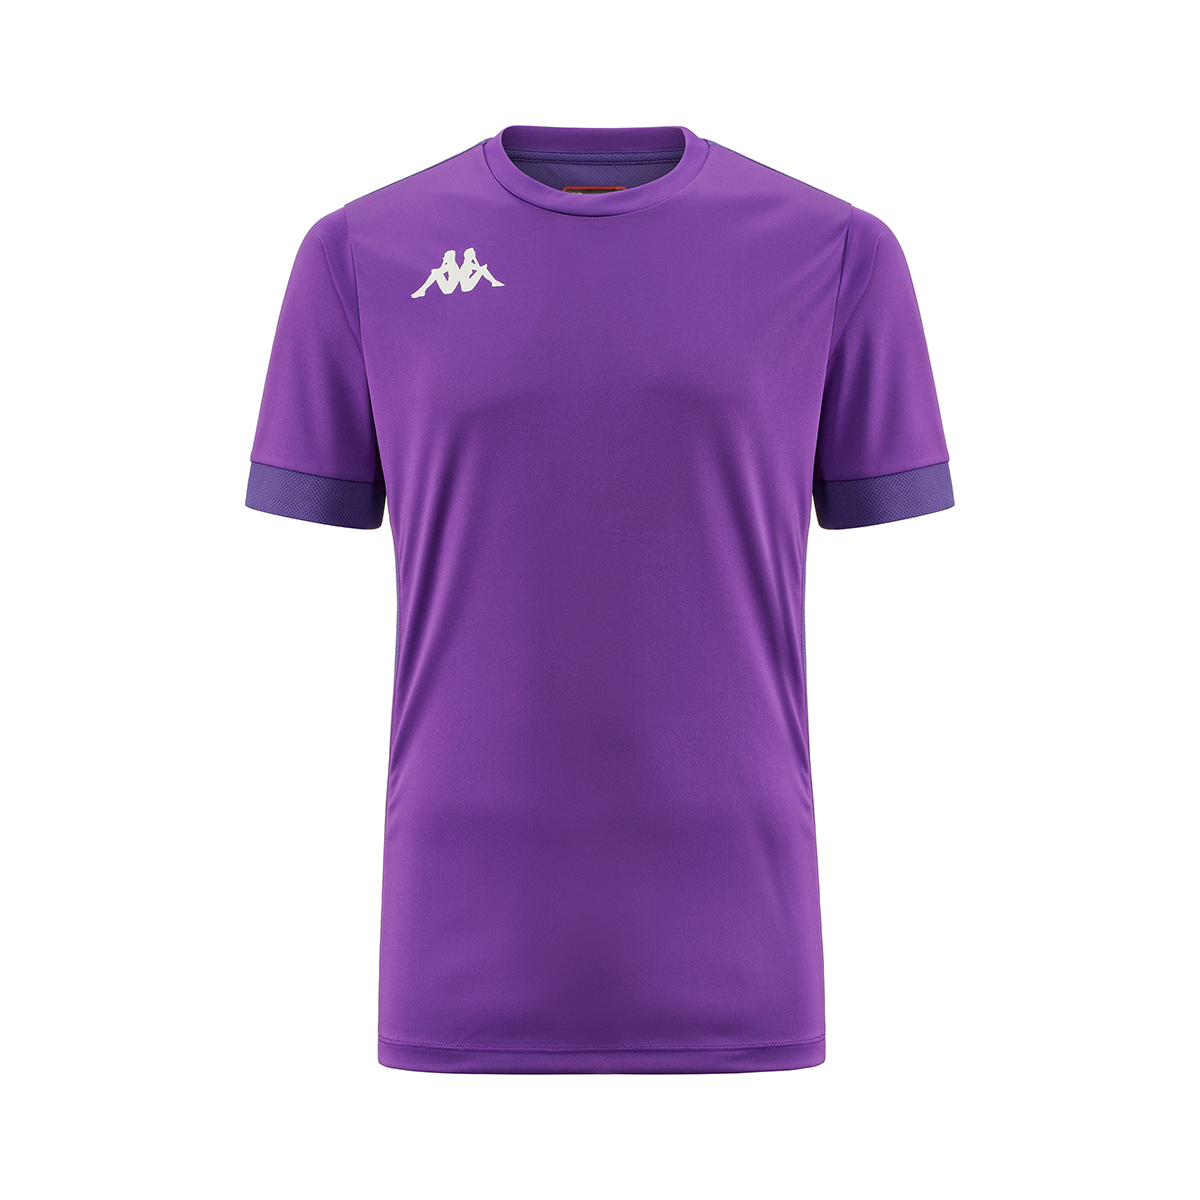 Camisetaa Dervia niño Púrpura - Imagen 1